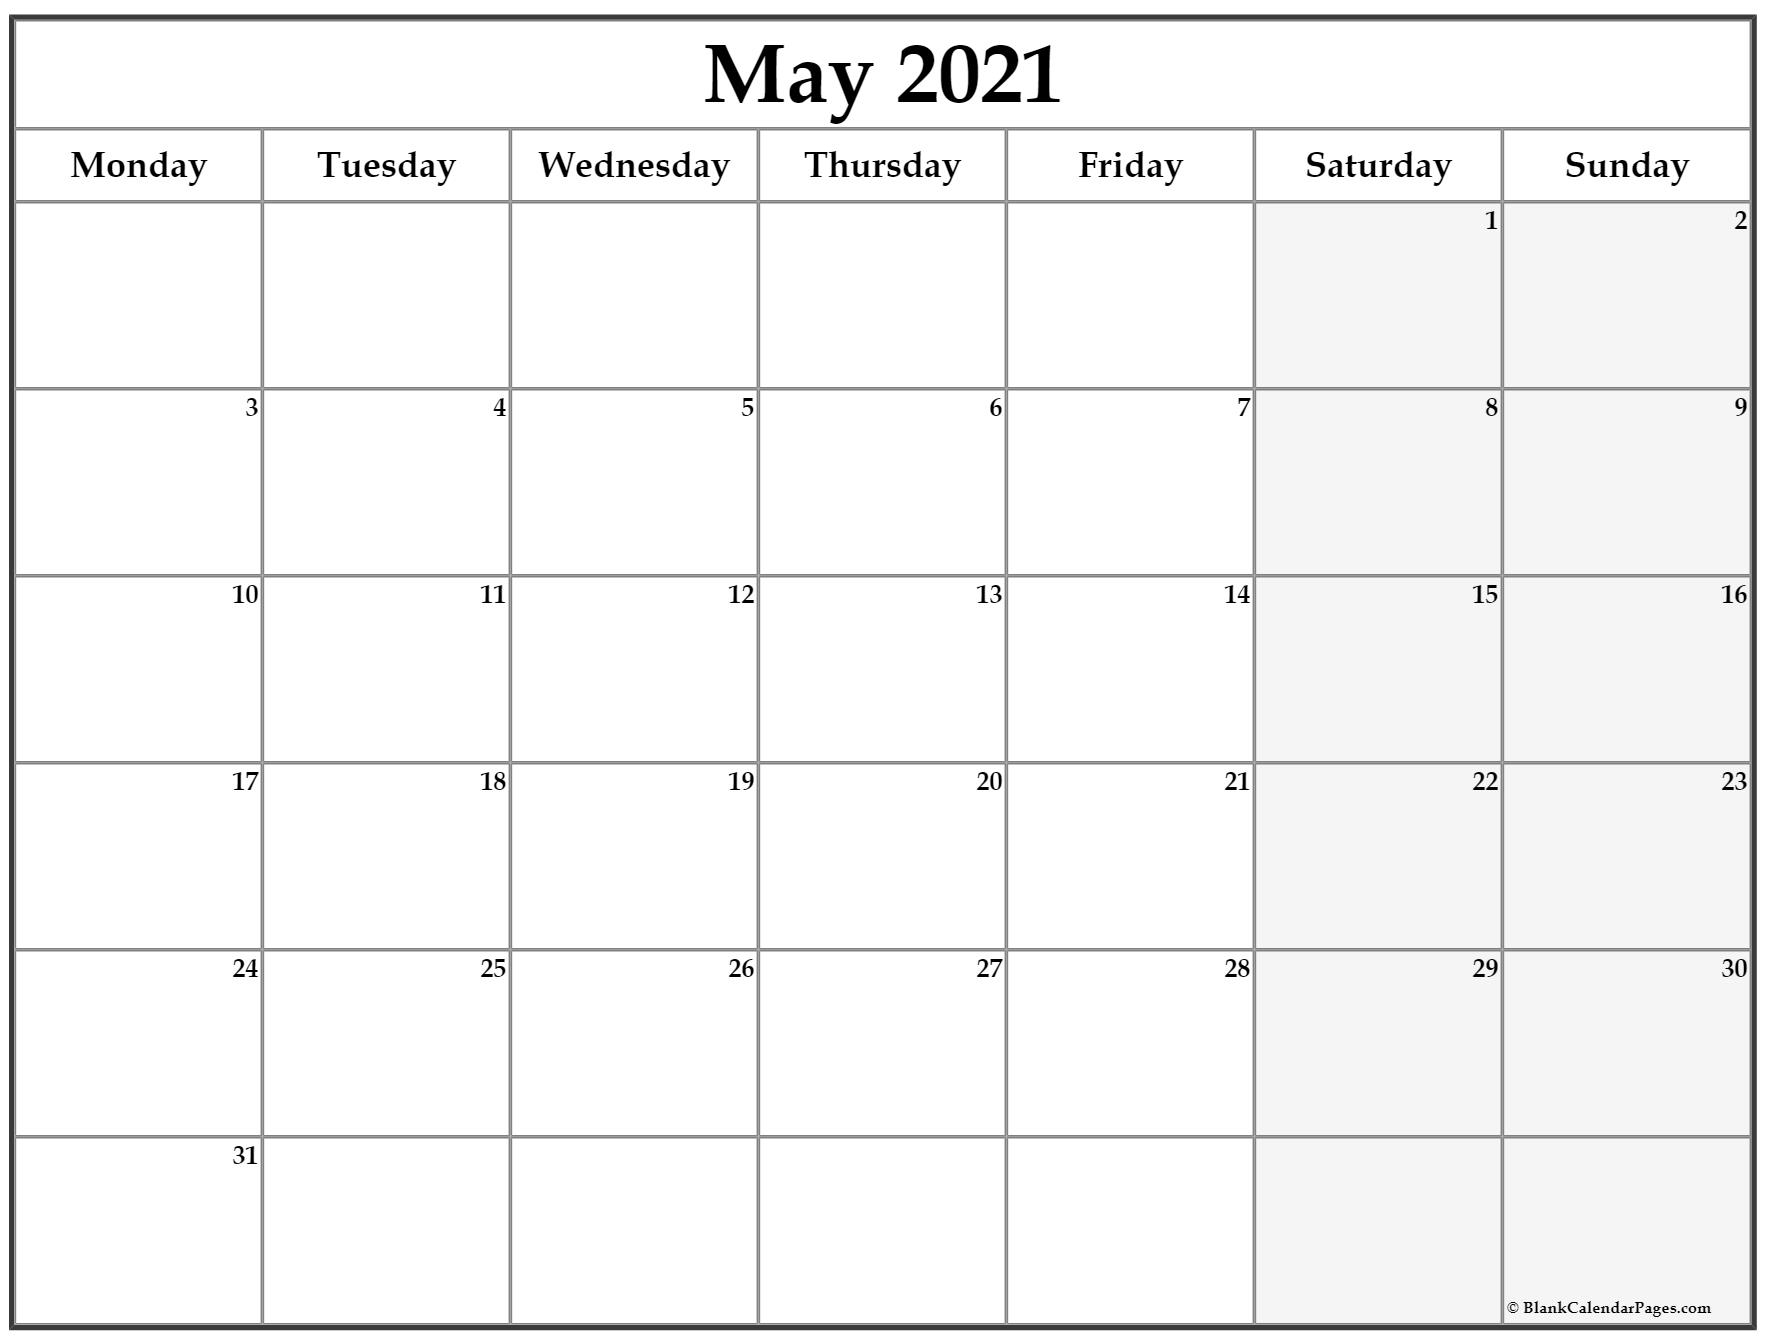 May 2021 Monday Calendar | Monday To Sunday